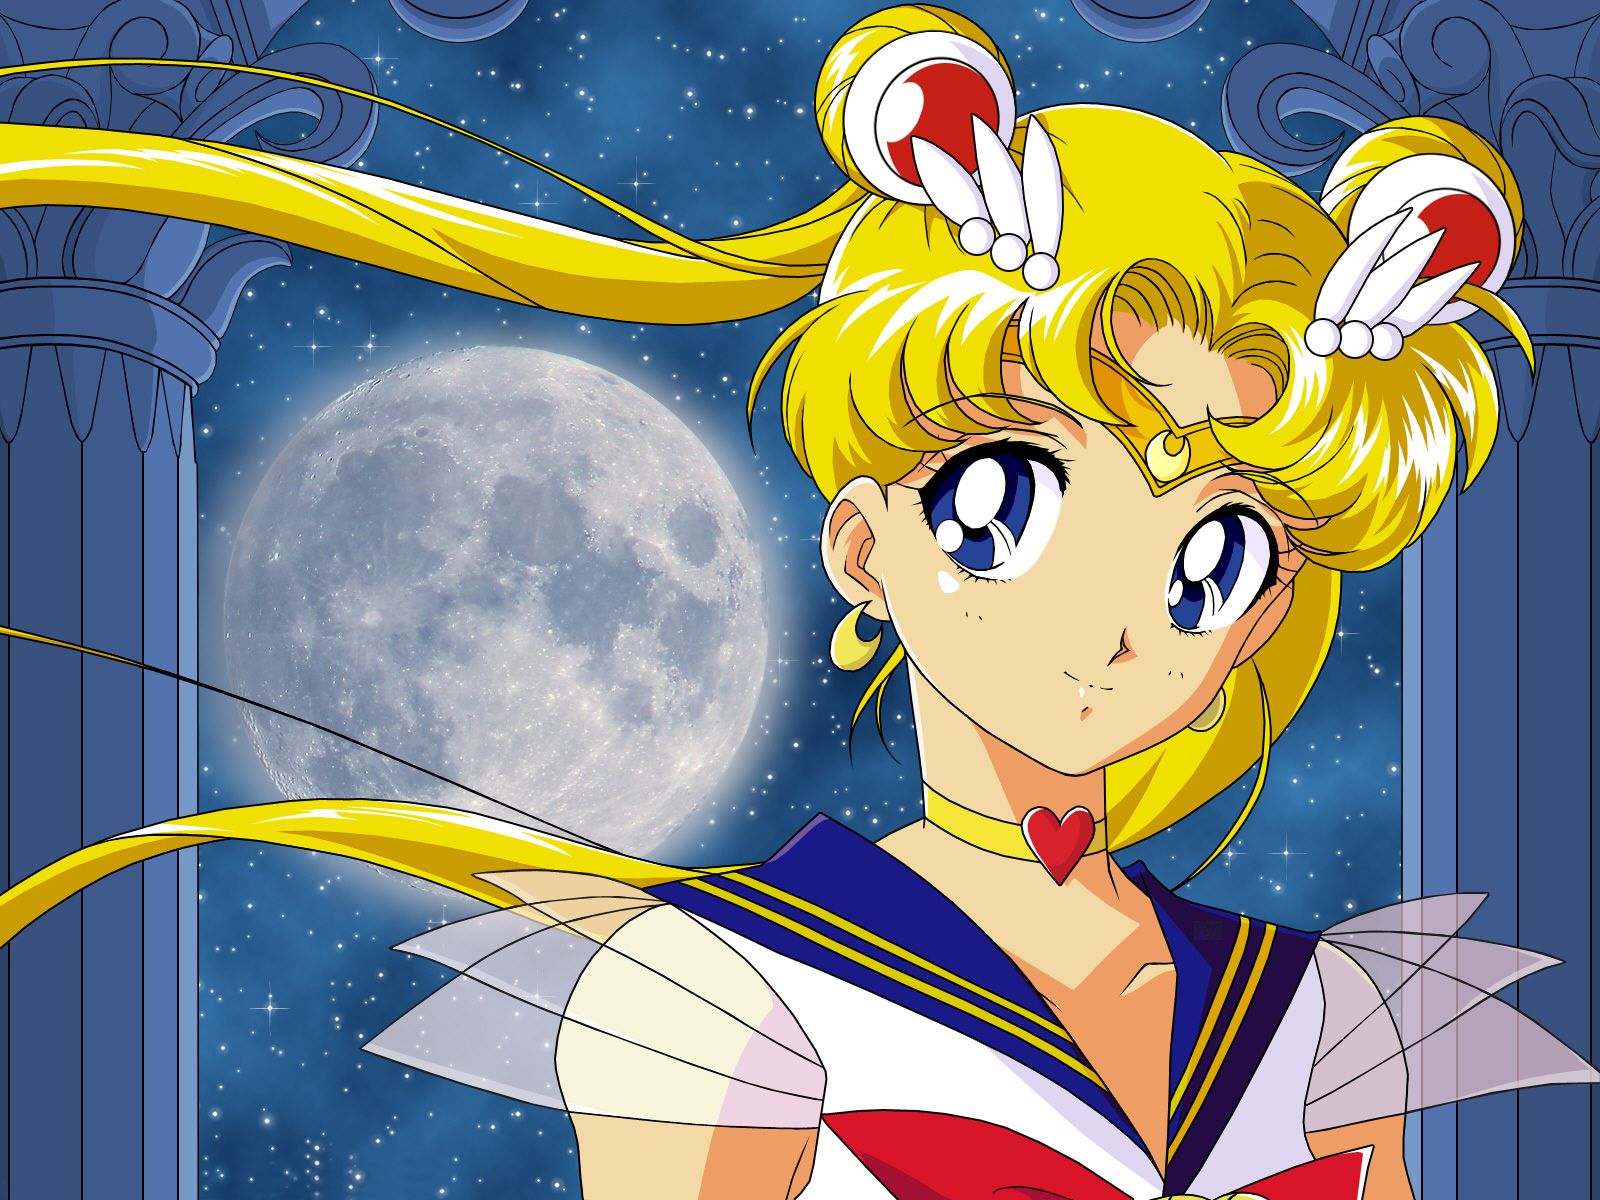 1. "Sailor Moon" - wide 2